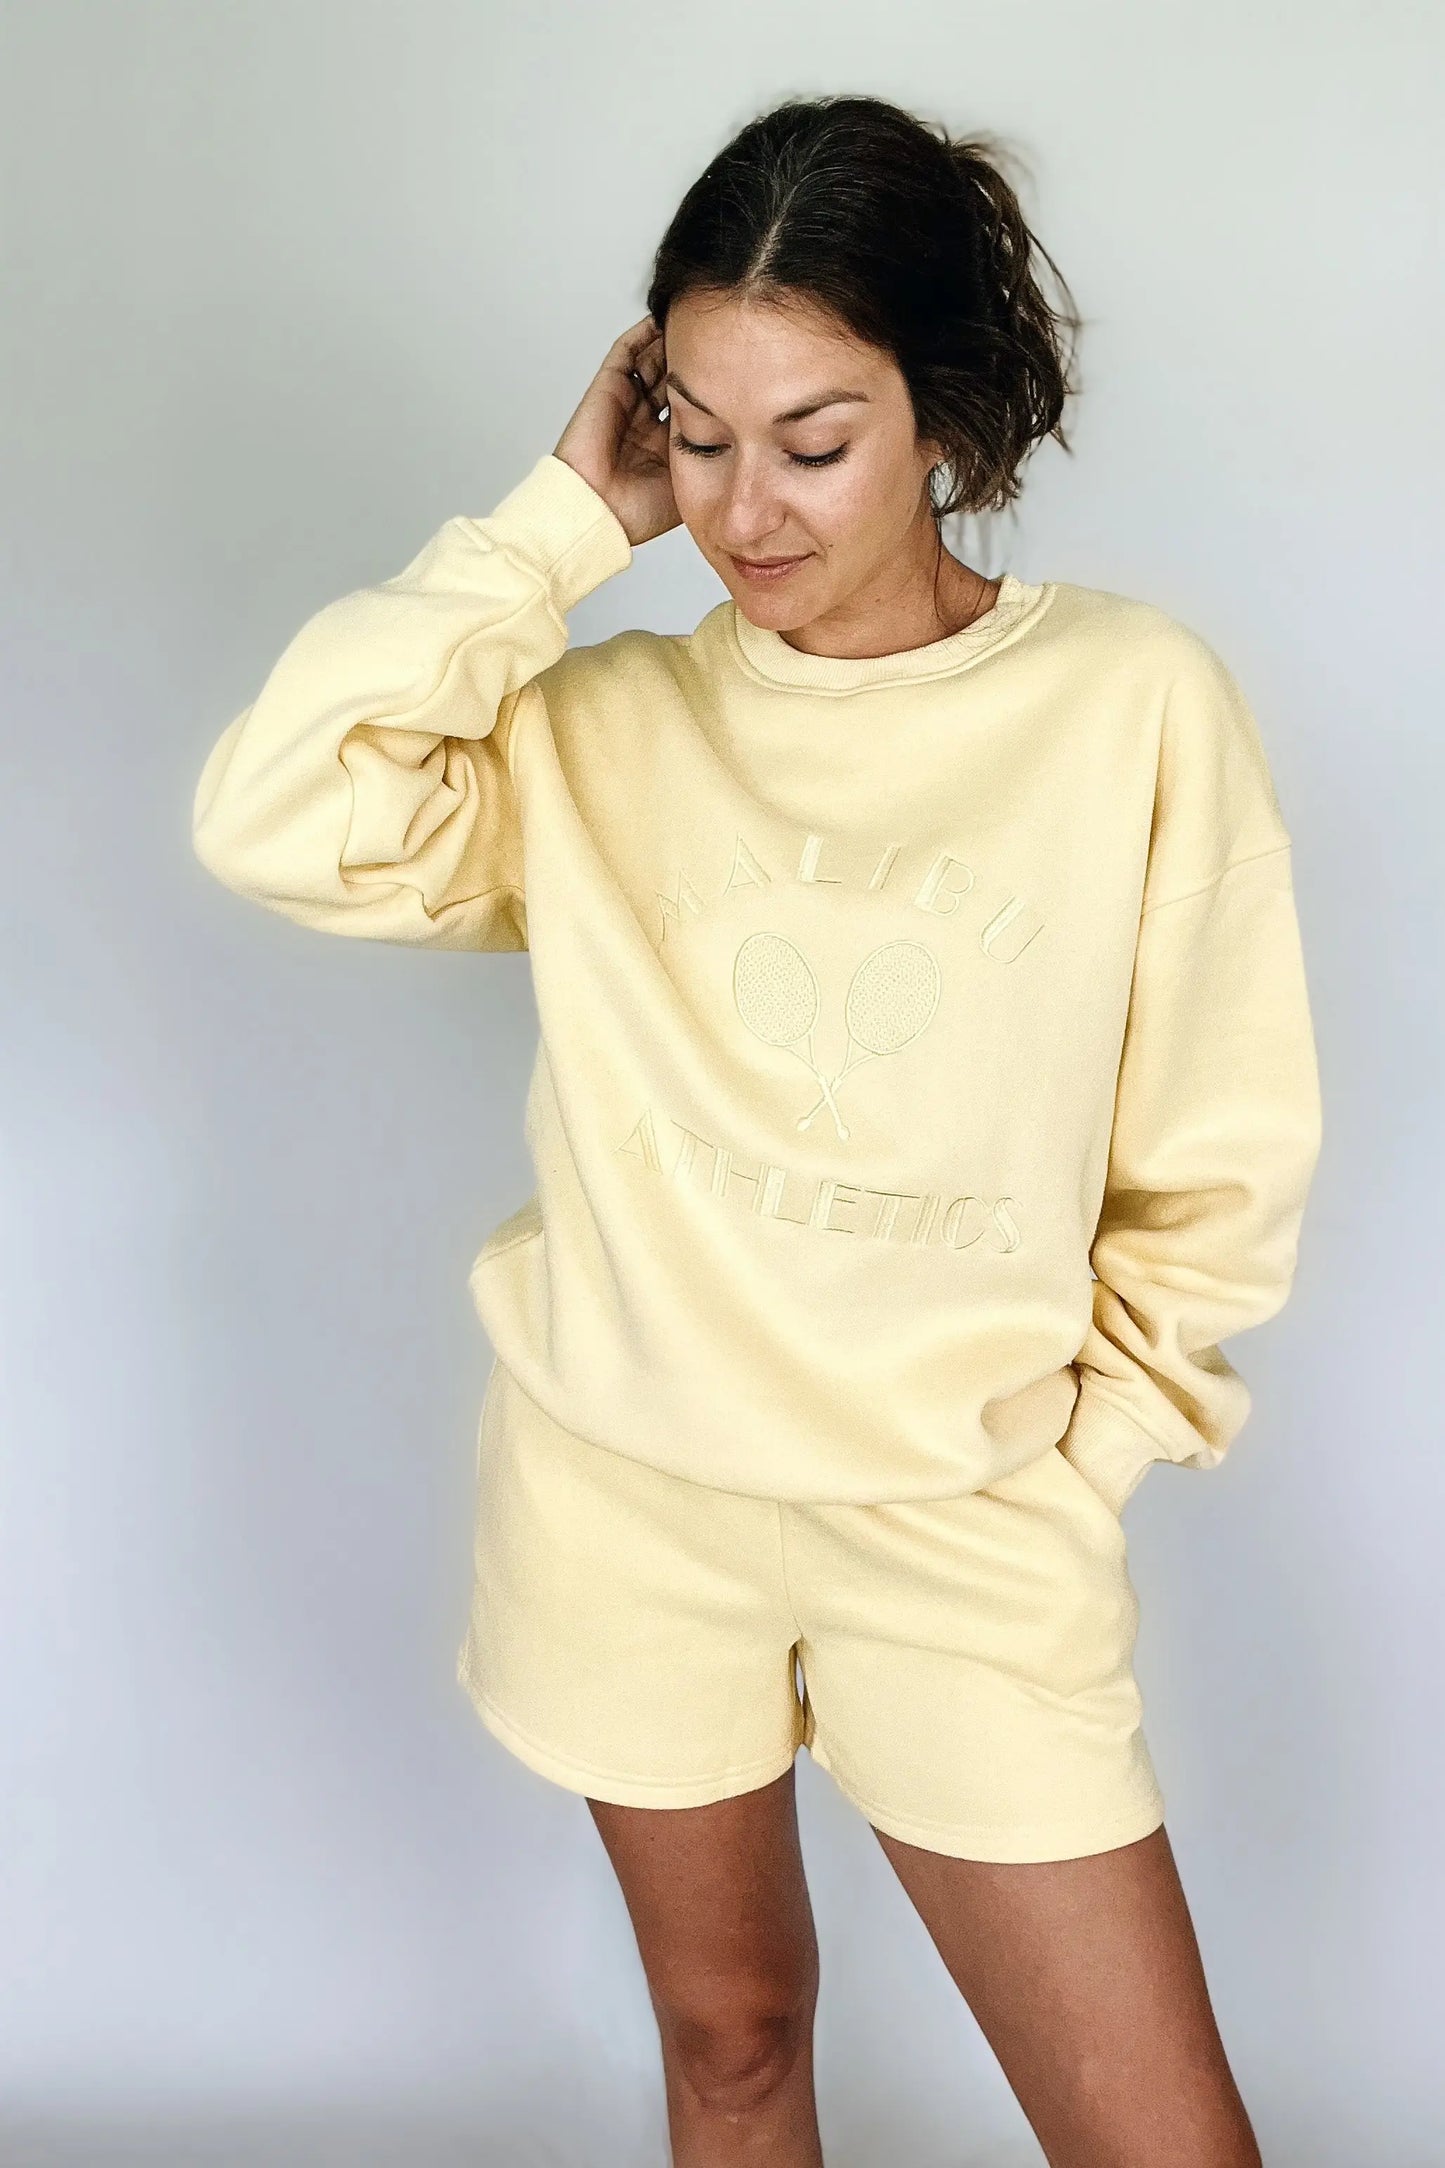 The Tiny Details modeling the Malibu Athletics Yellow Pullover Sweatshirt